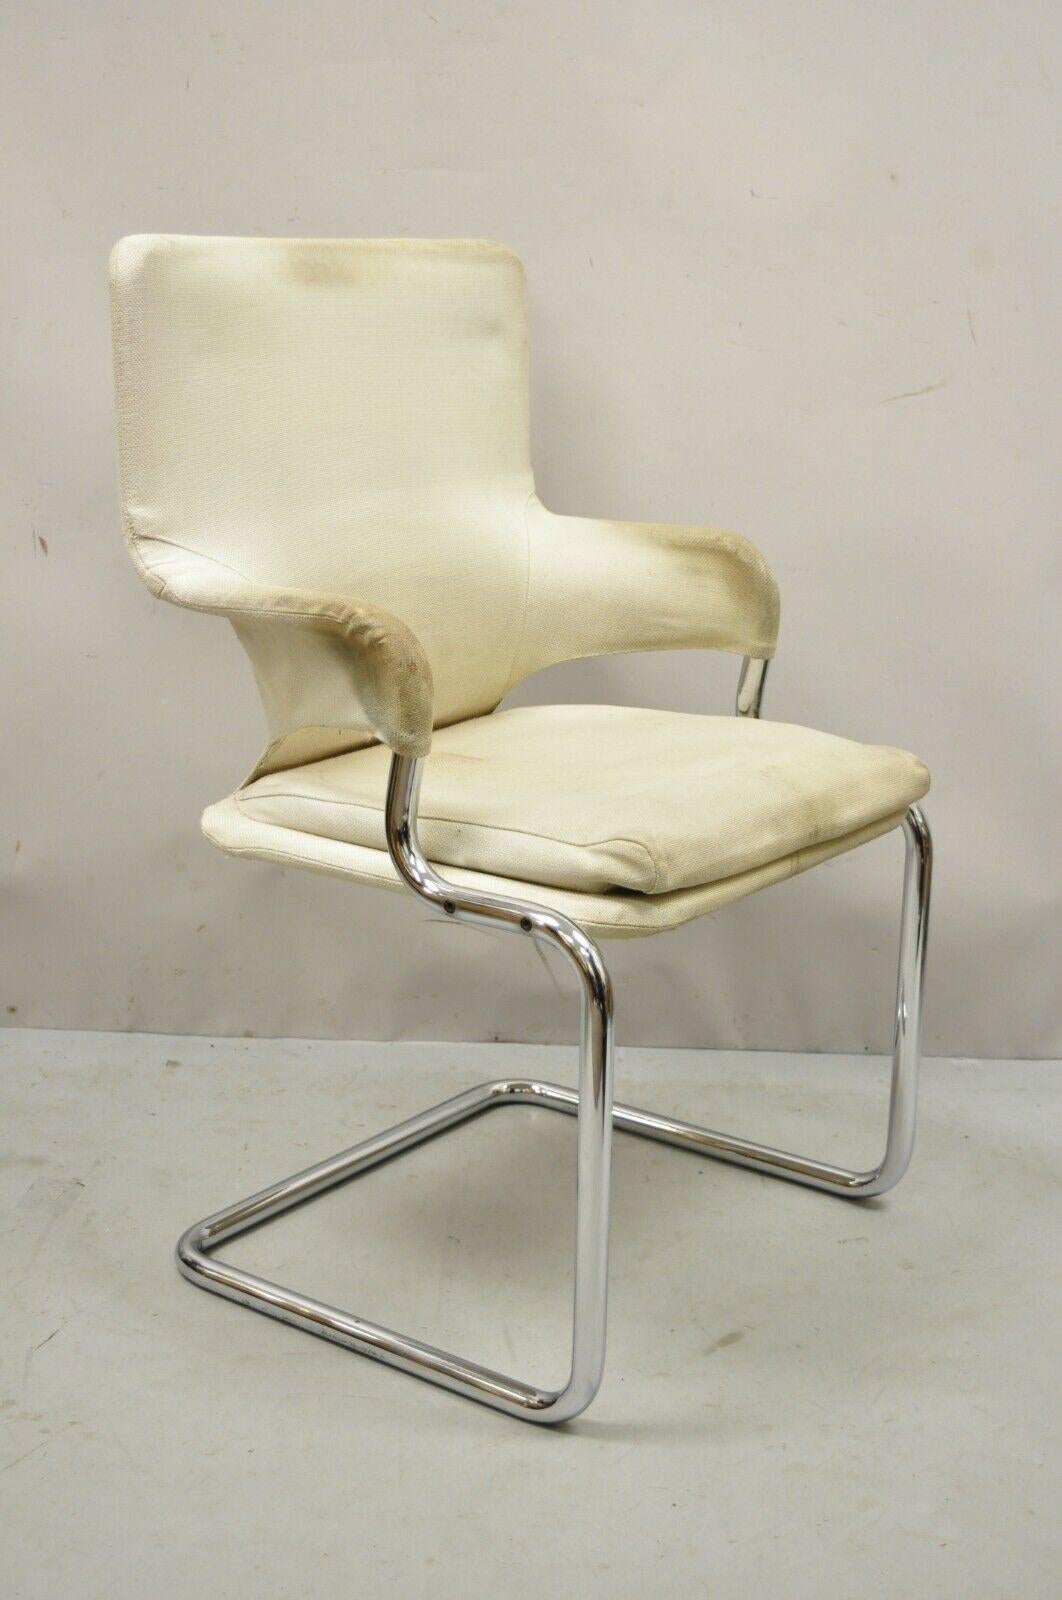 Vintage Mid-Century Modern Tubular Chrome Arm Chair with Burlap Seat For Sale 6